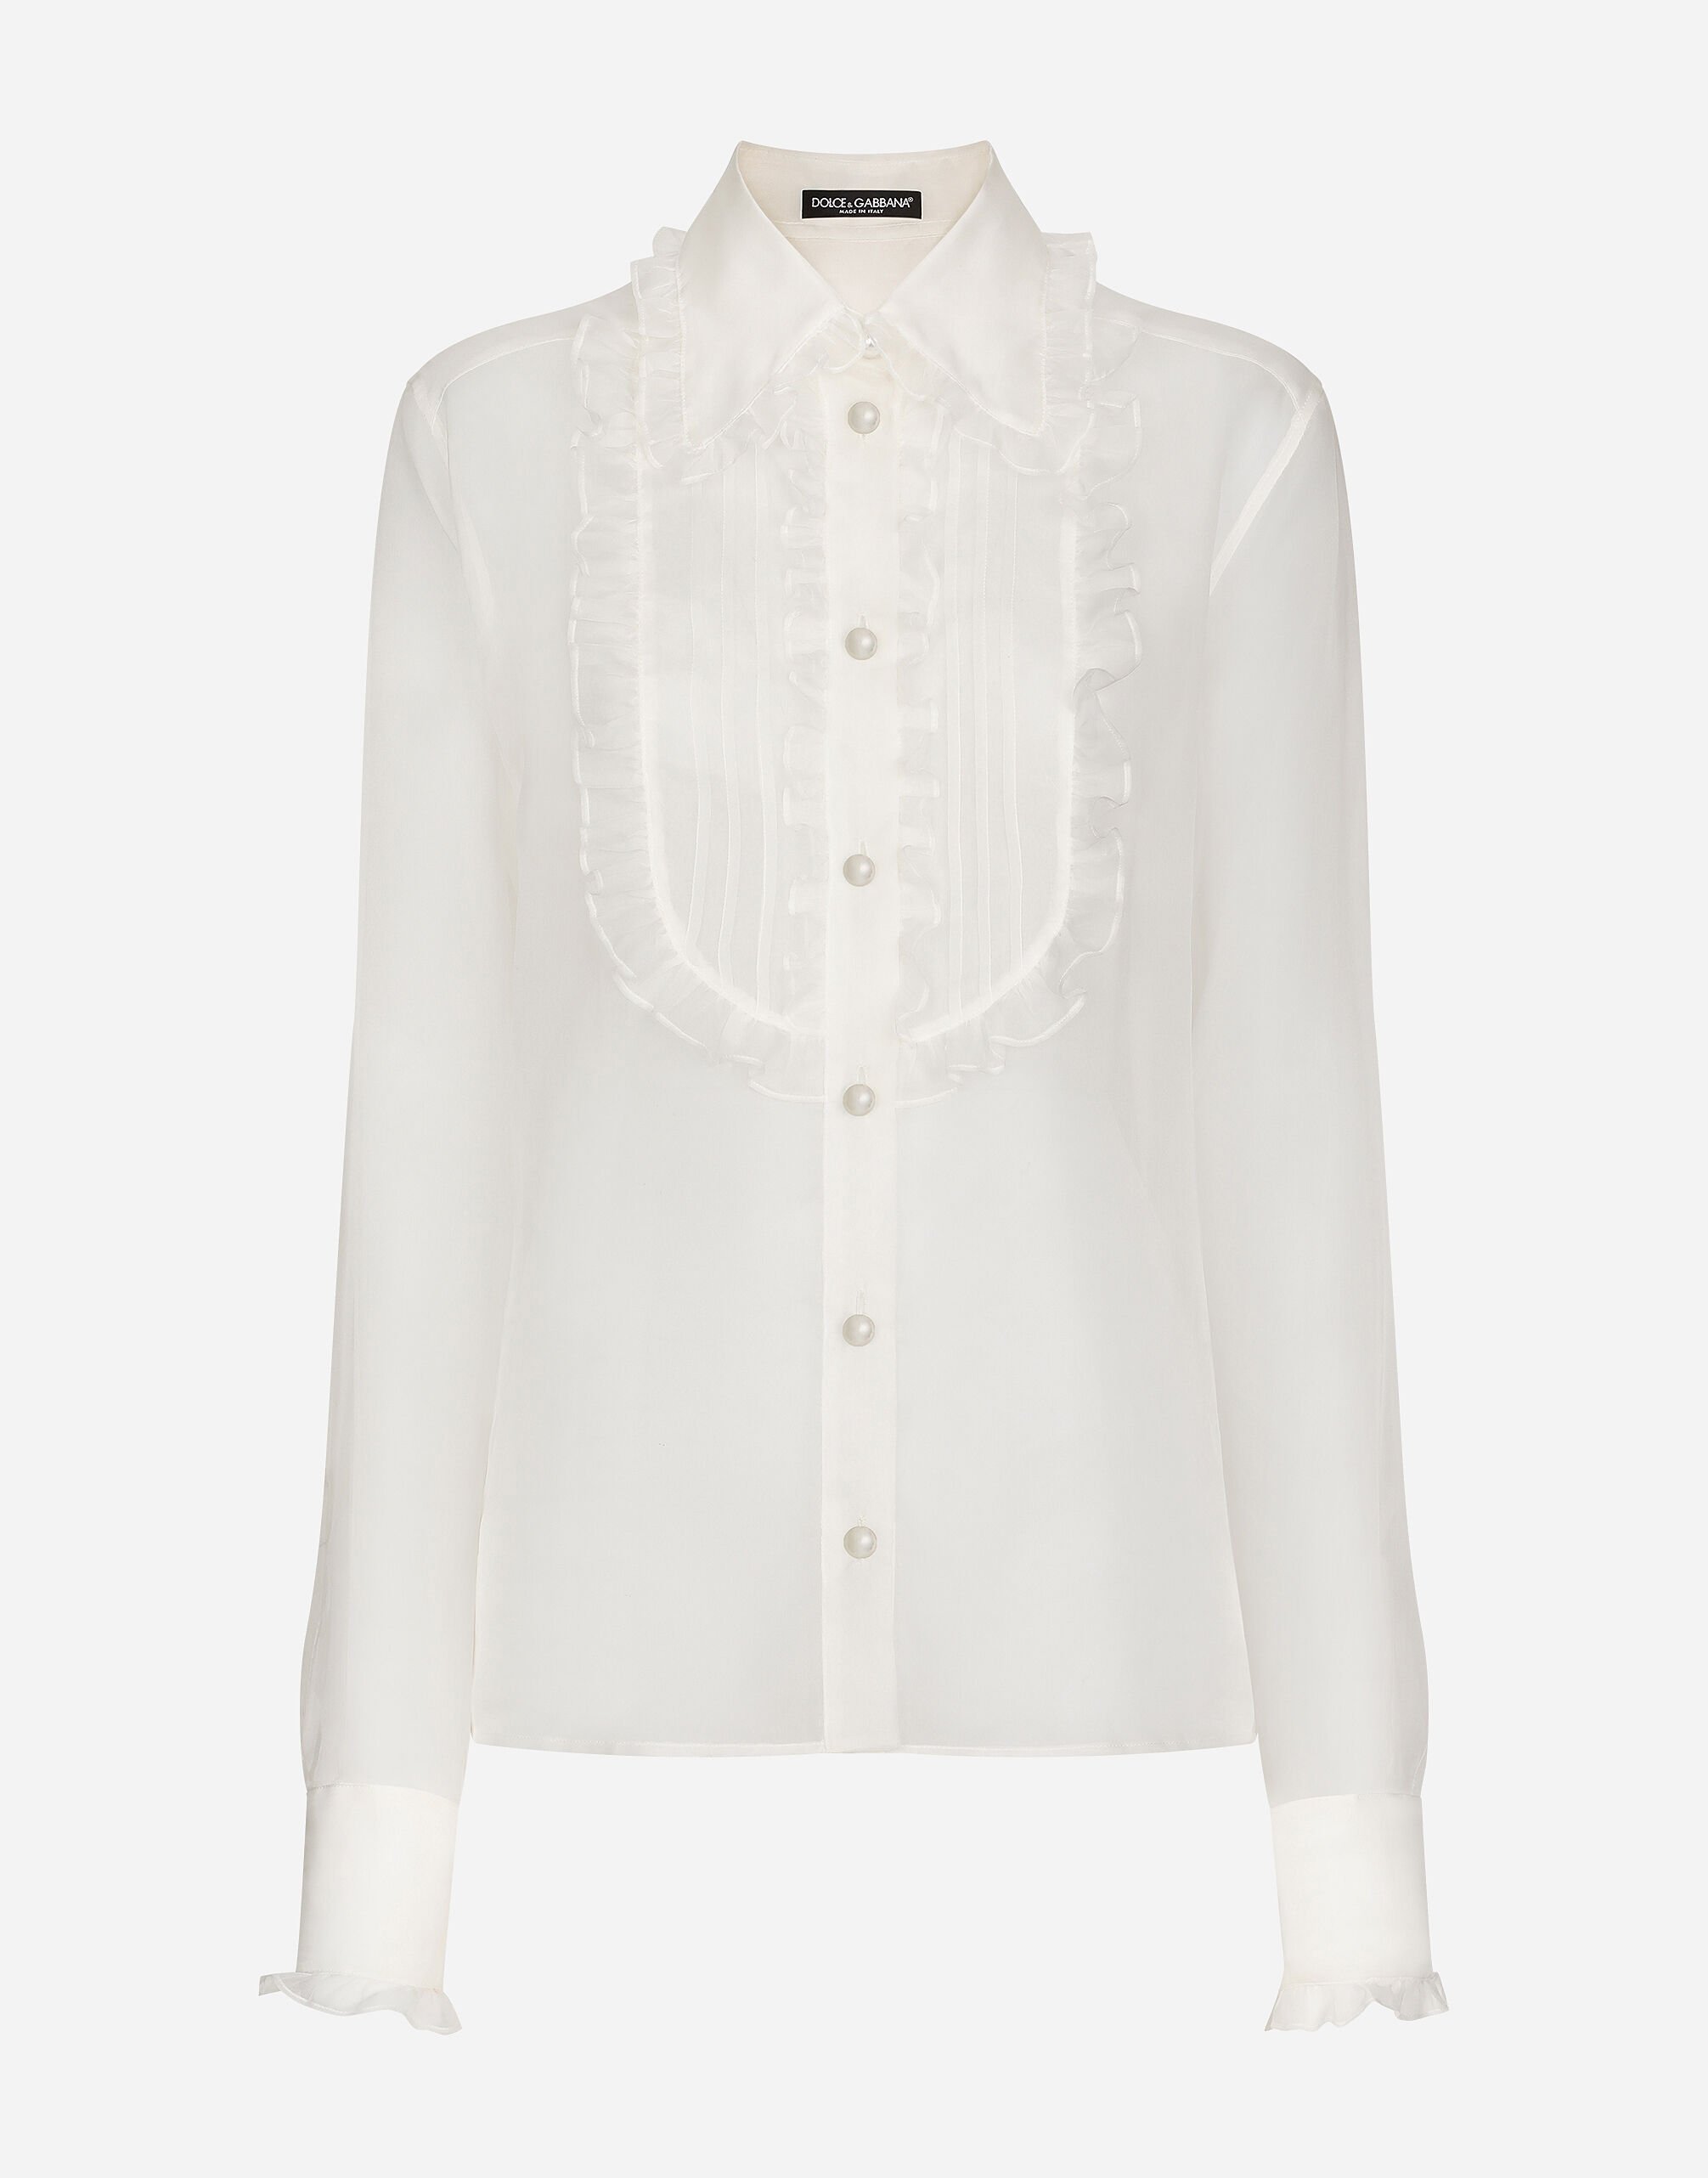 Dolce & Gabbana Organza shirt with shirt front and ruffles Print F0E1KFFJSCU